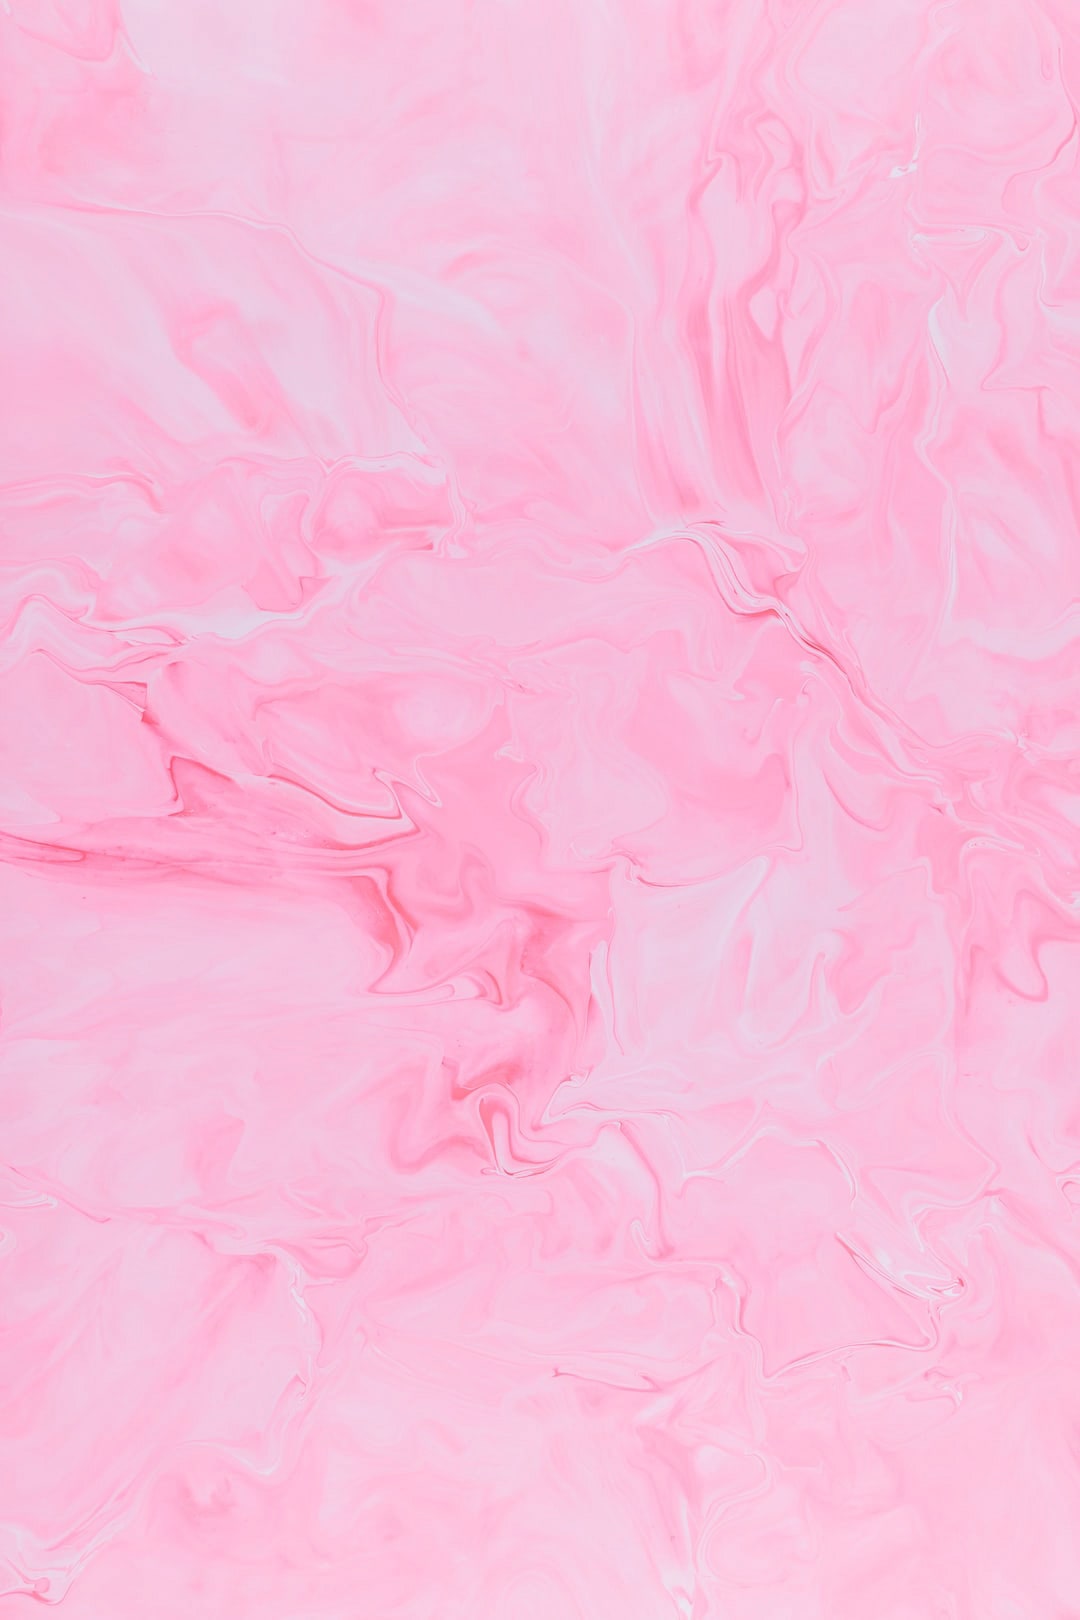 Pink Plain Wallpaper - NawPic